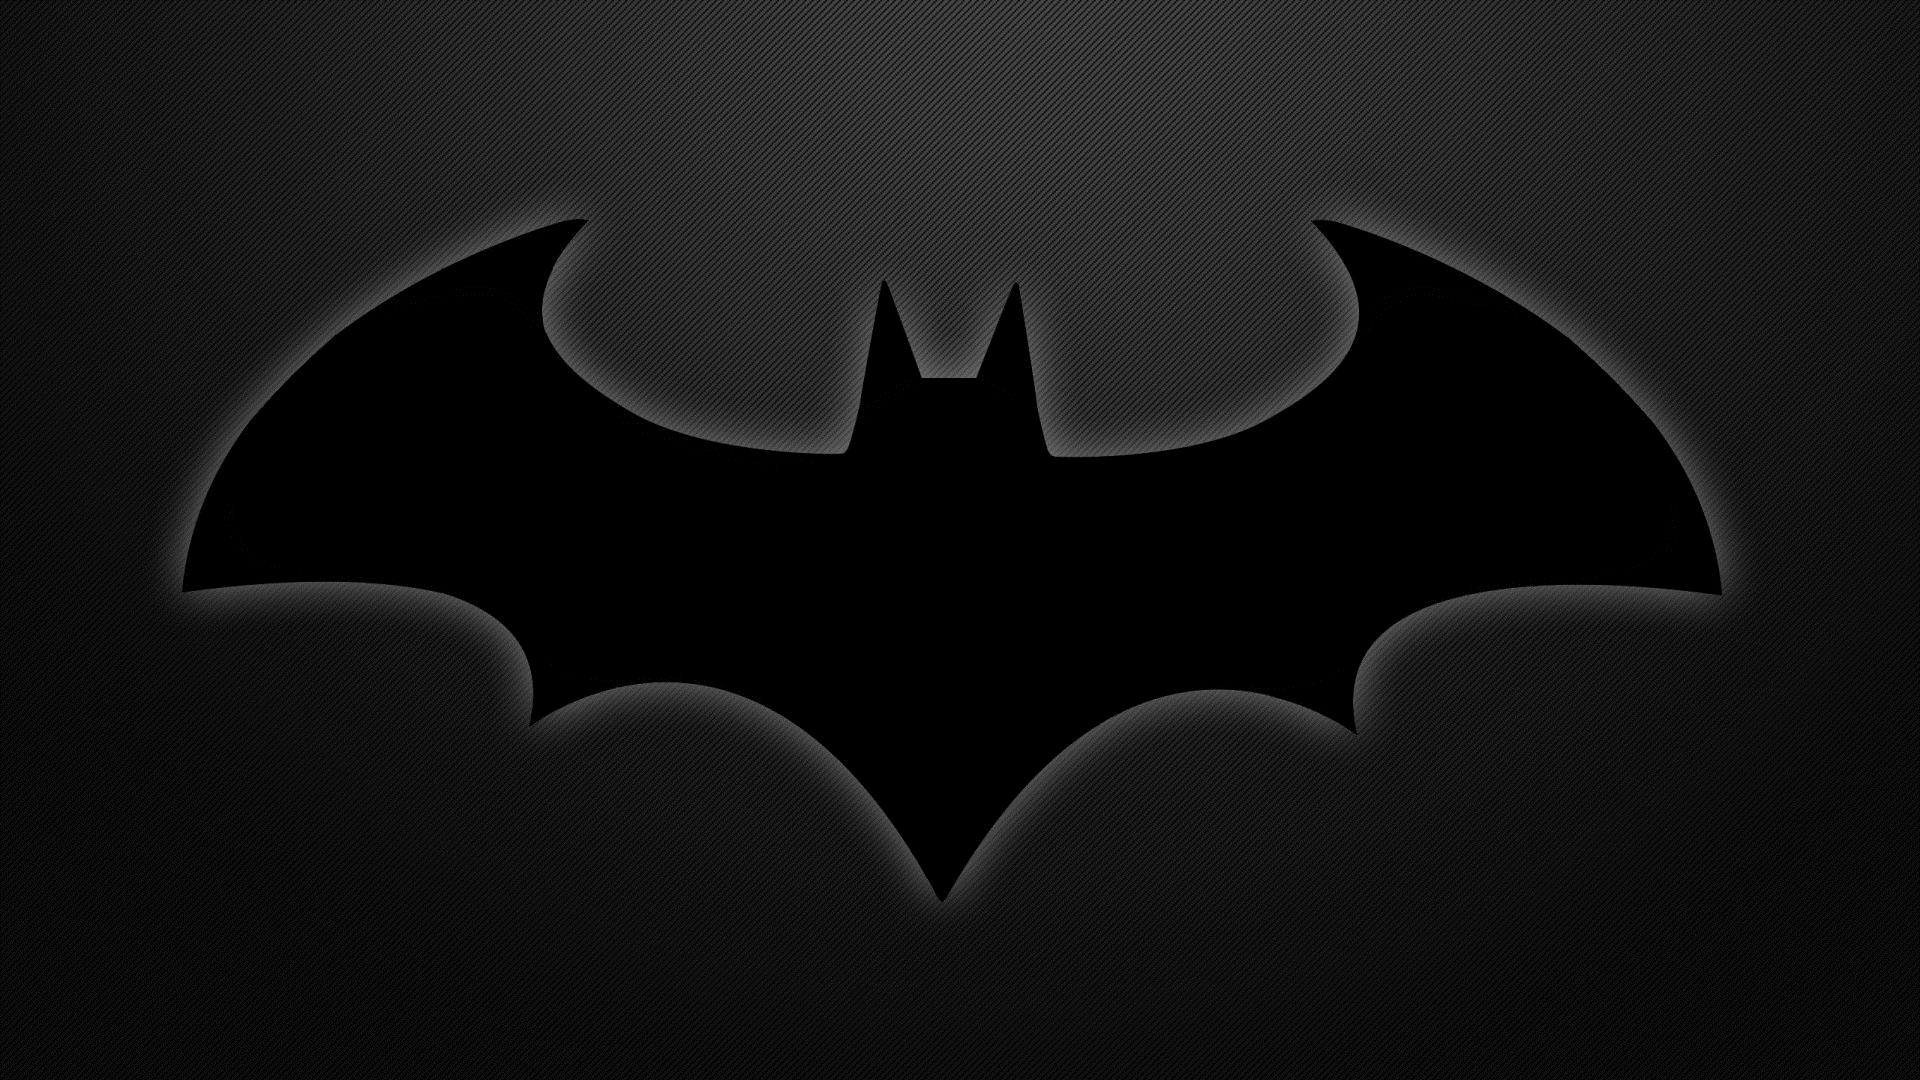 Free Batman Symbol Download Free Clip Art Free Clip Art on